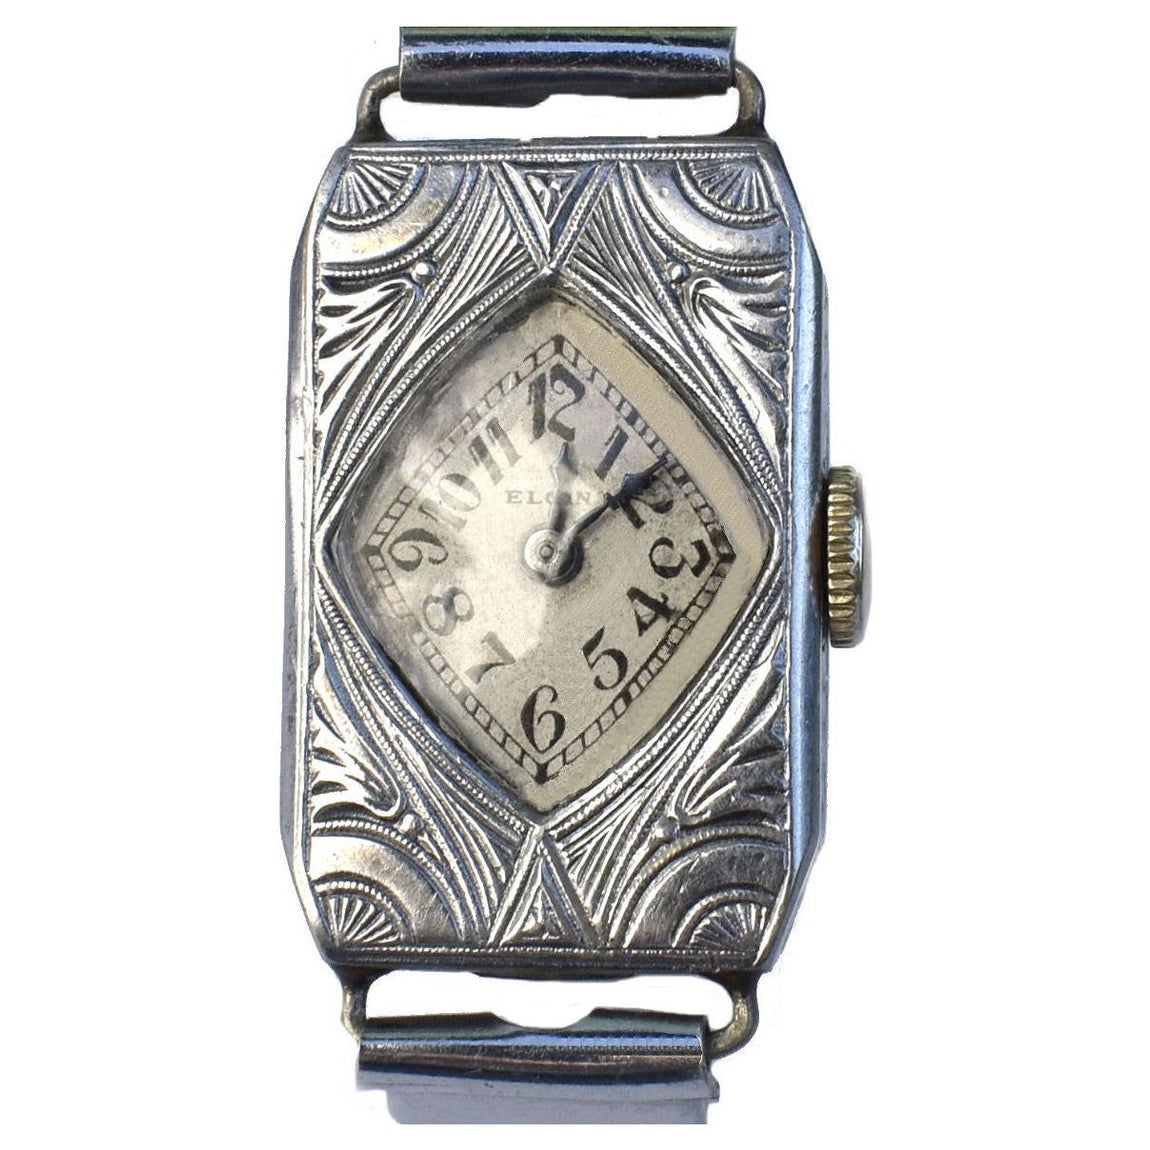 Art Deco Ladies Wrist Watch by Elgin, Serviced, c1930's